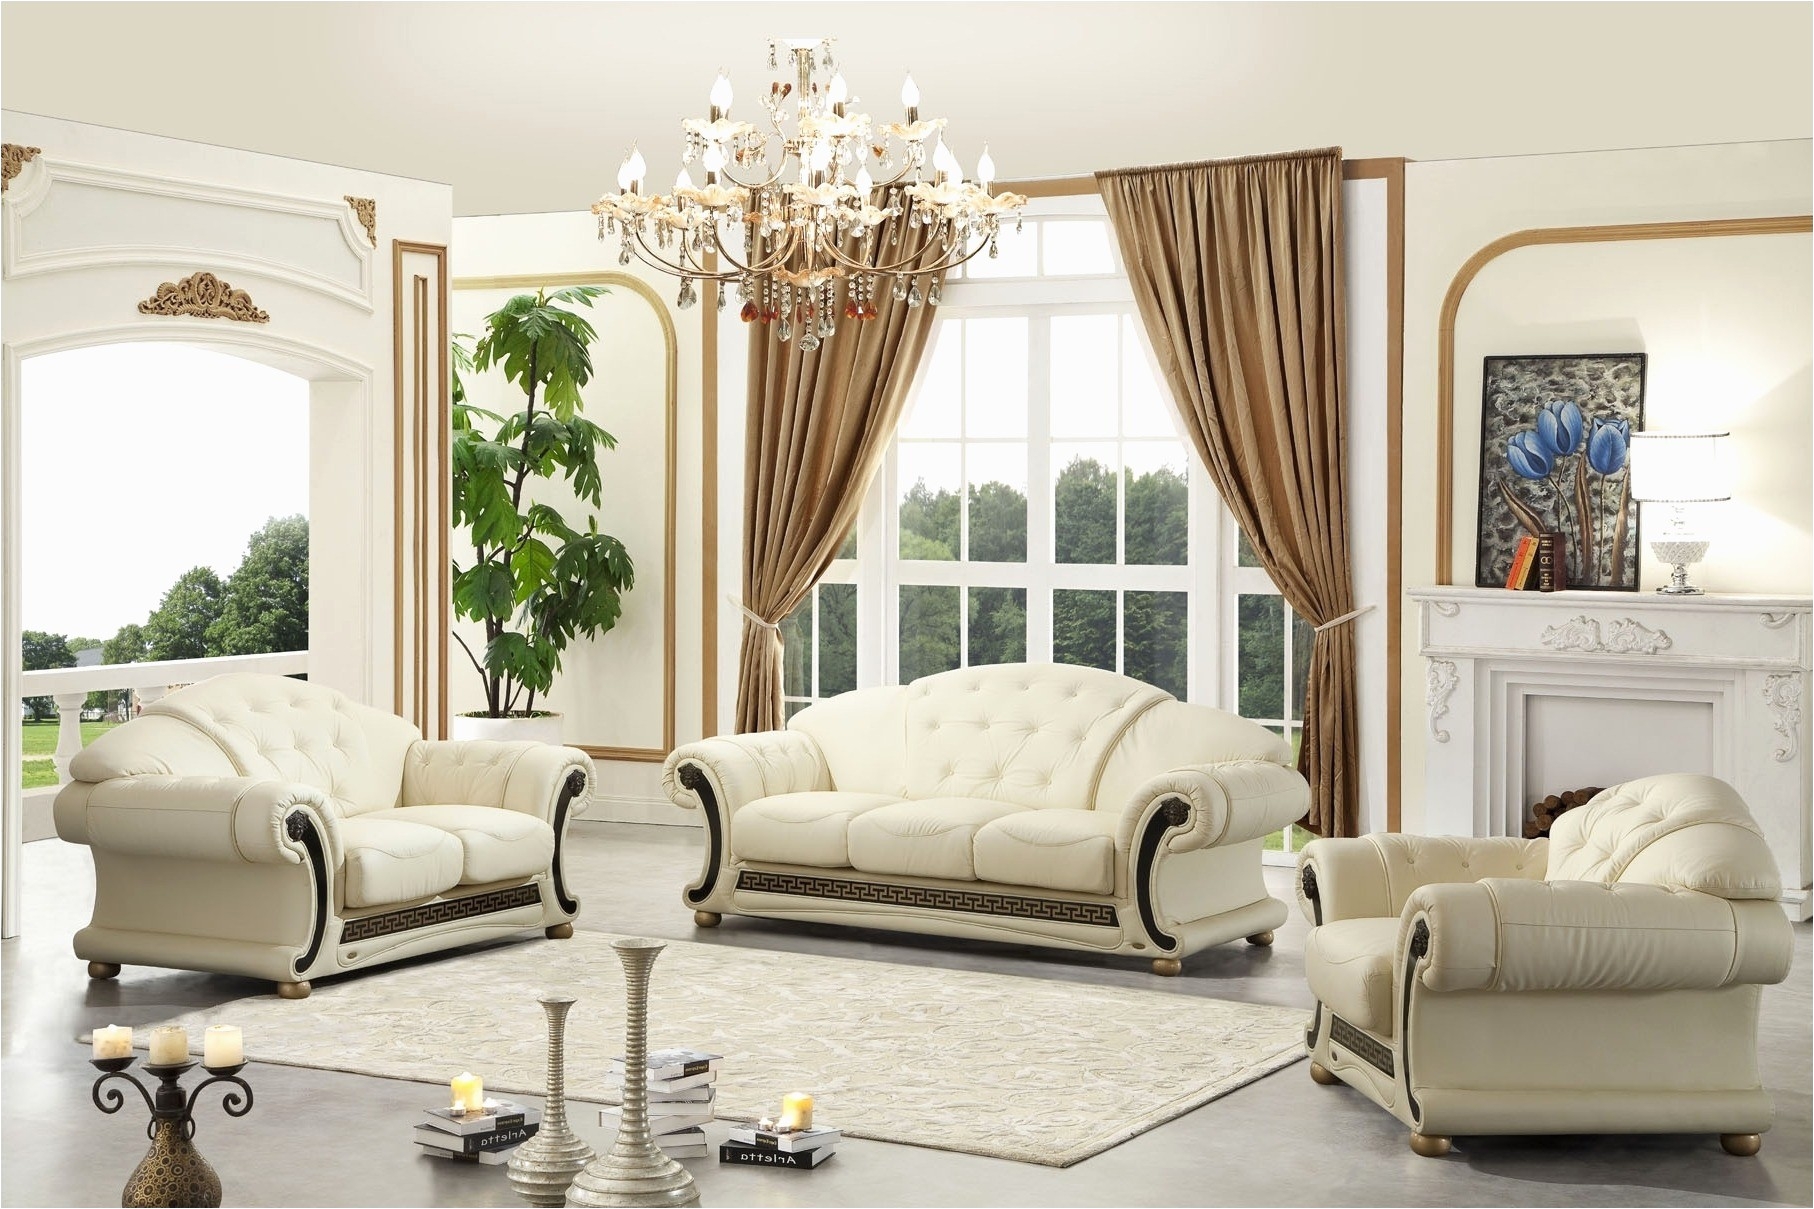 Www Craigslist Com atlanta Furniture Free Furniture atlanta Best Craigslist Used Cars atlanta Ga Luxury